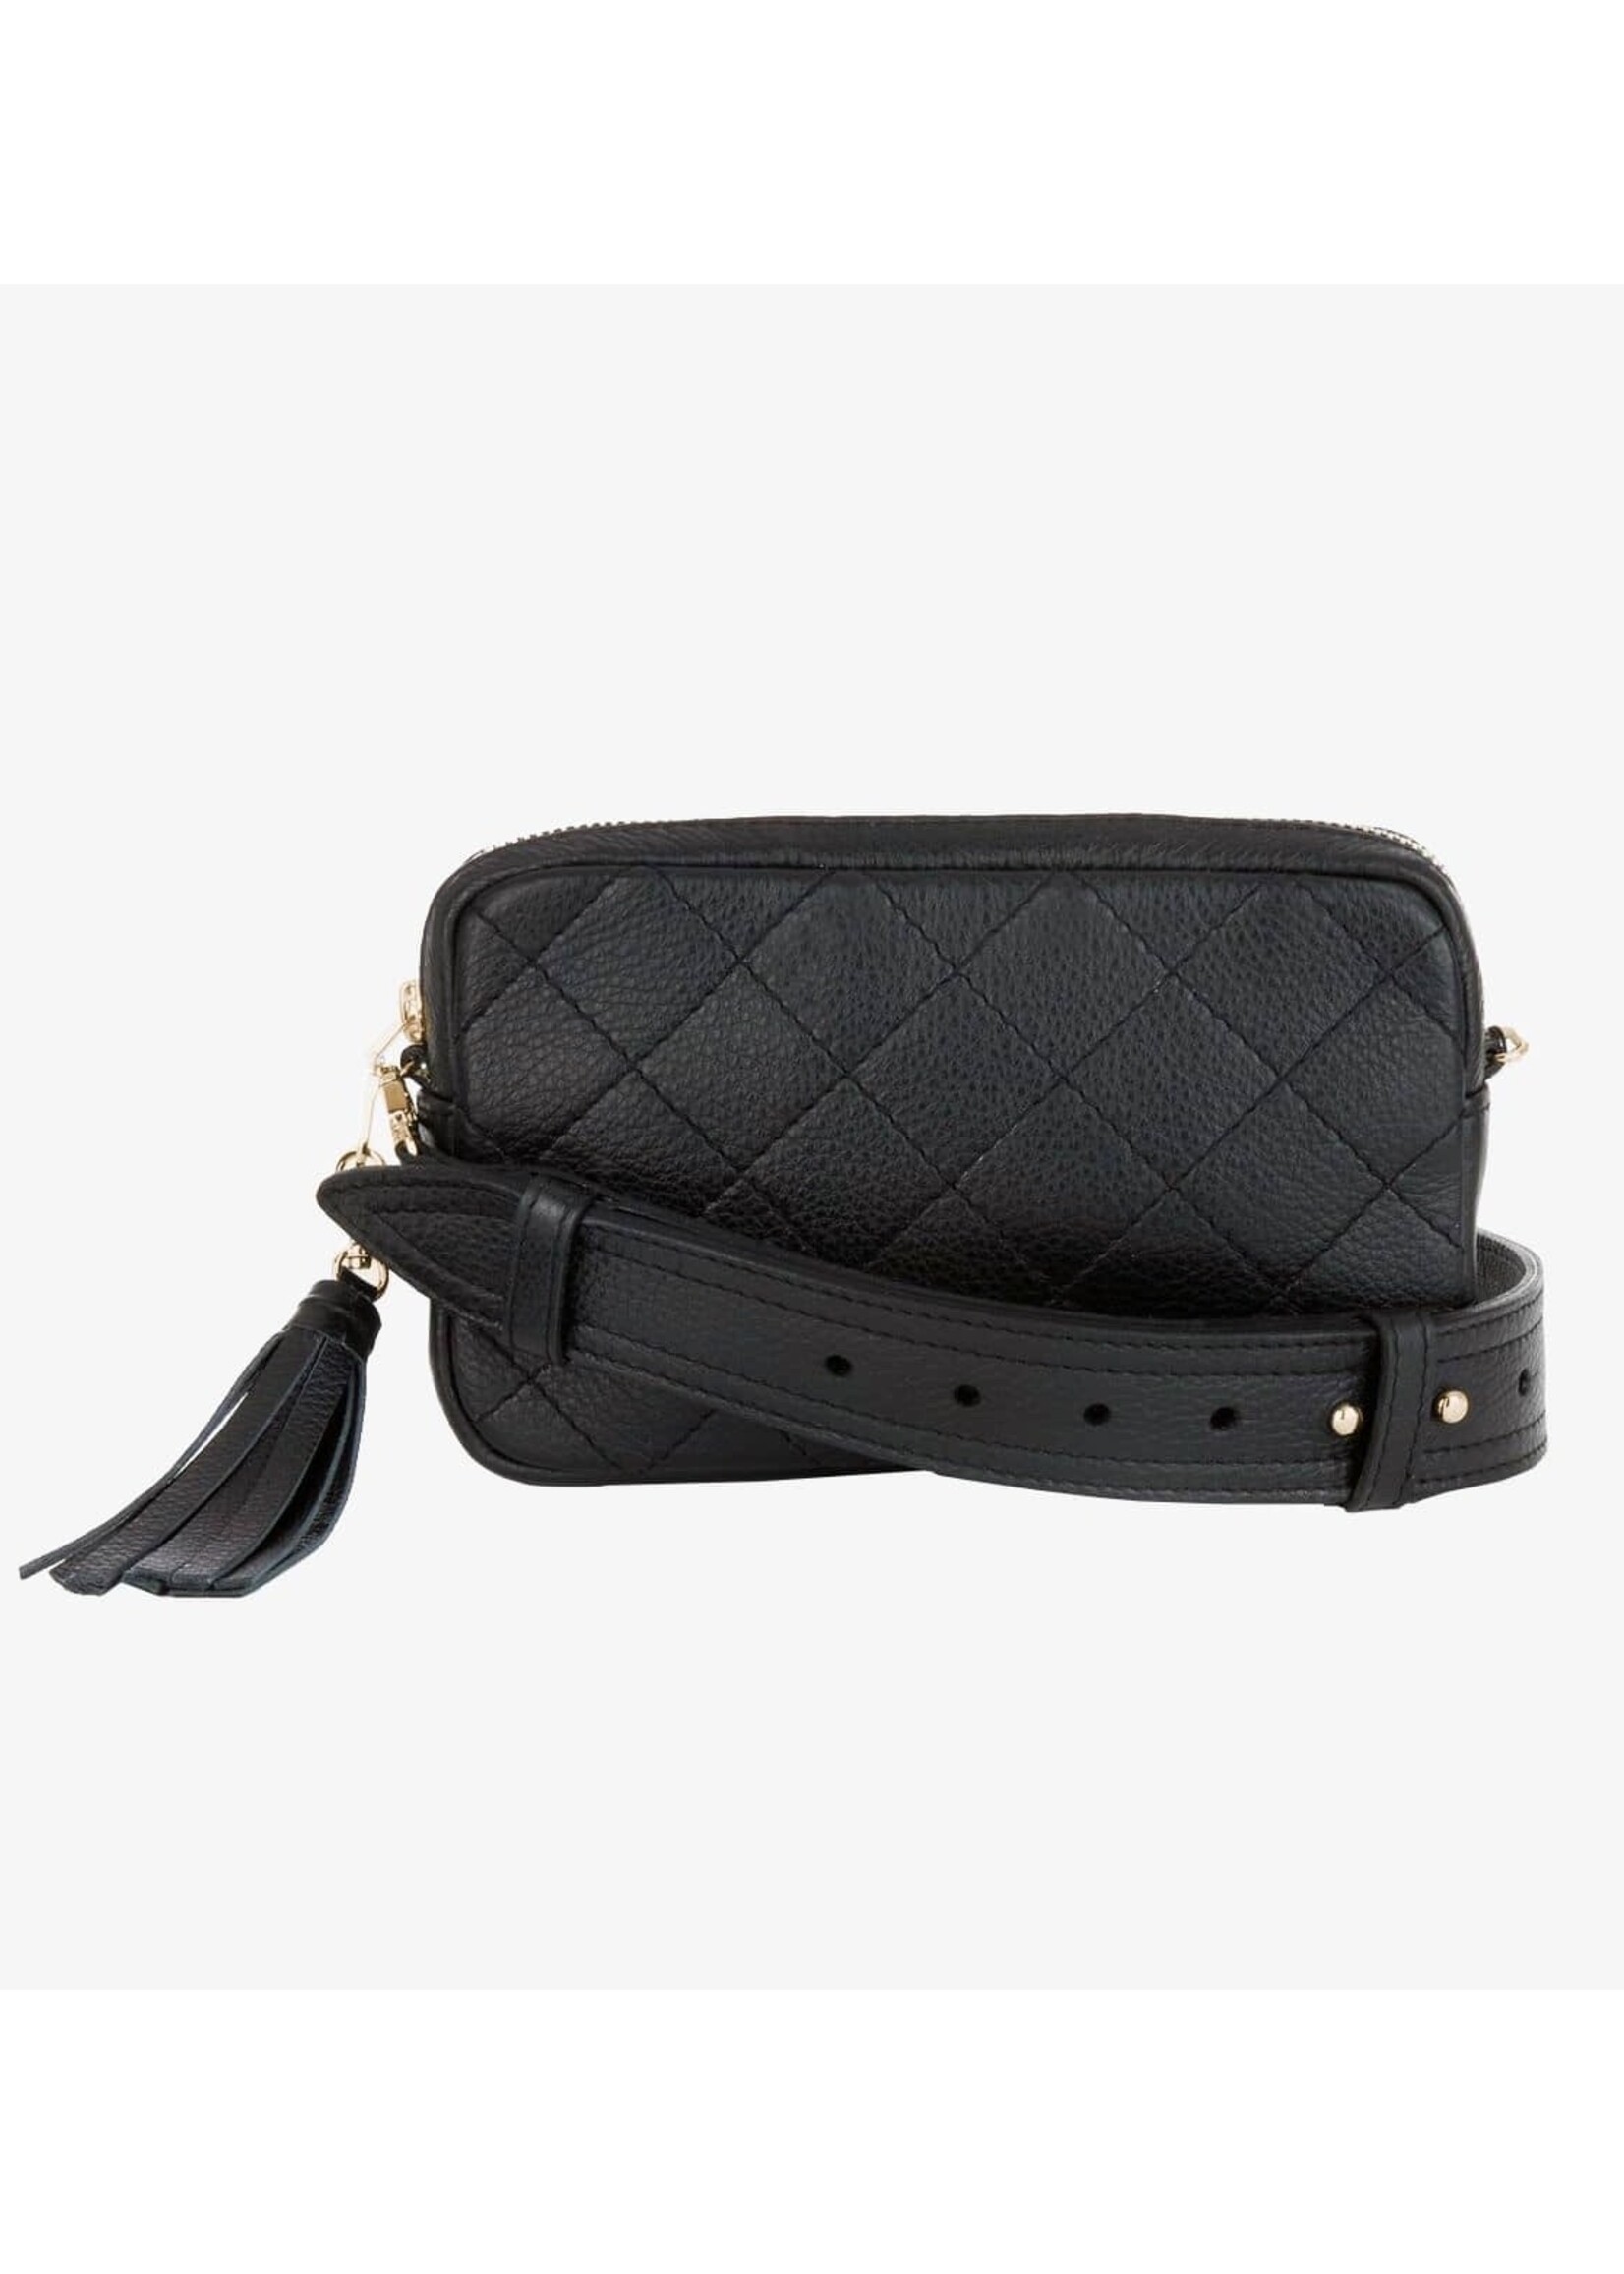 BRAVE LEATHER SONNET leather purse